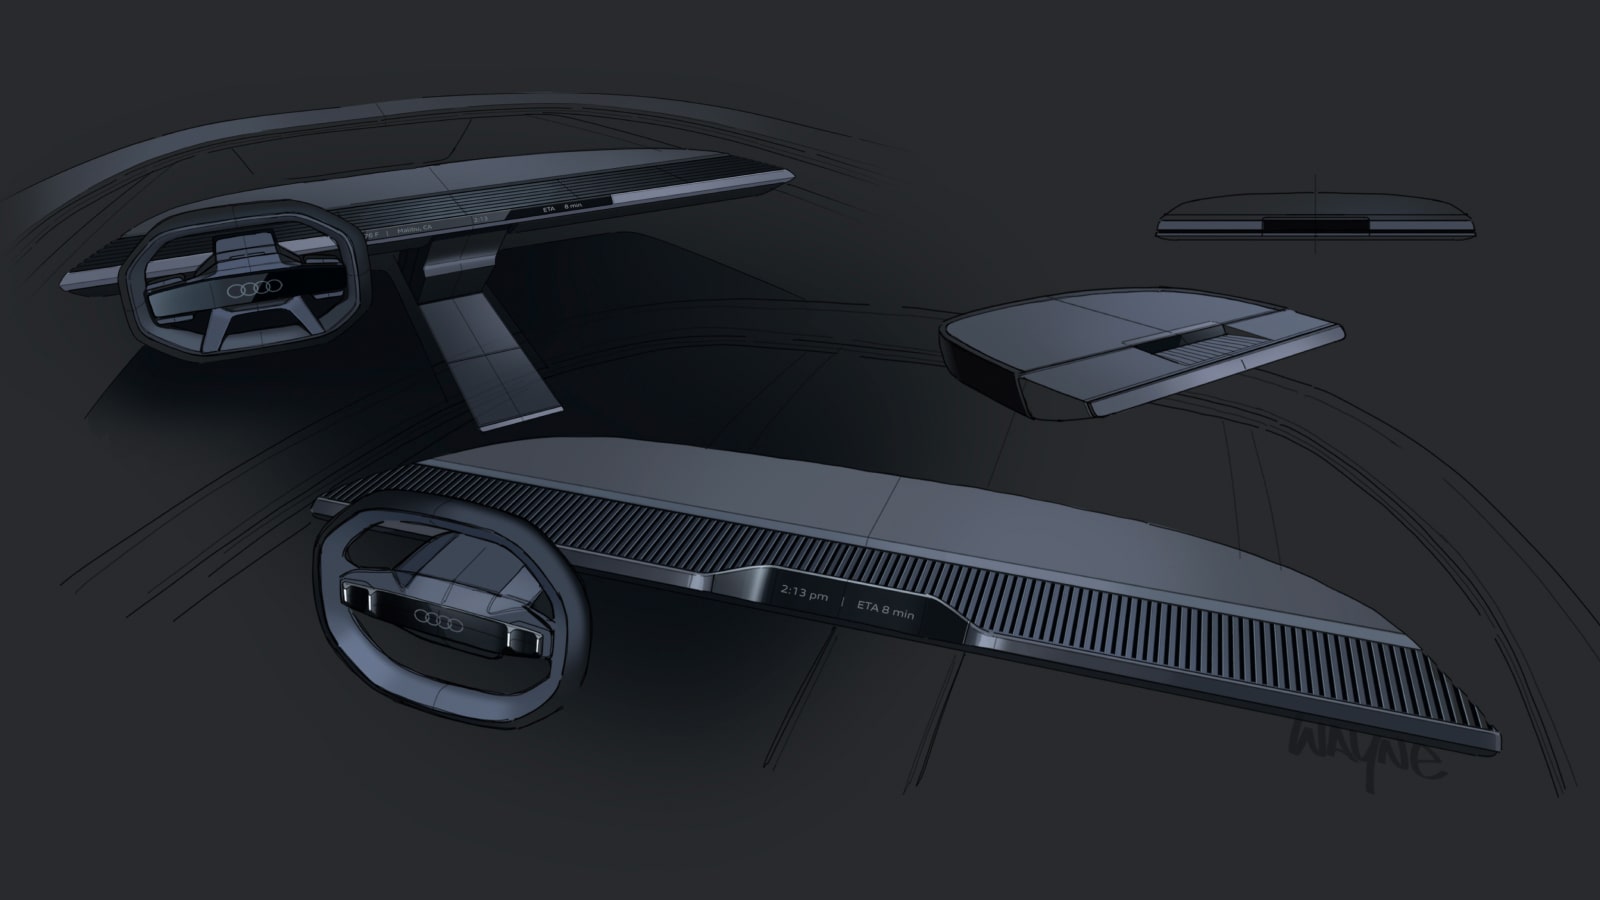 Audi Activesphere dashboard concept sketches